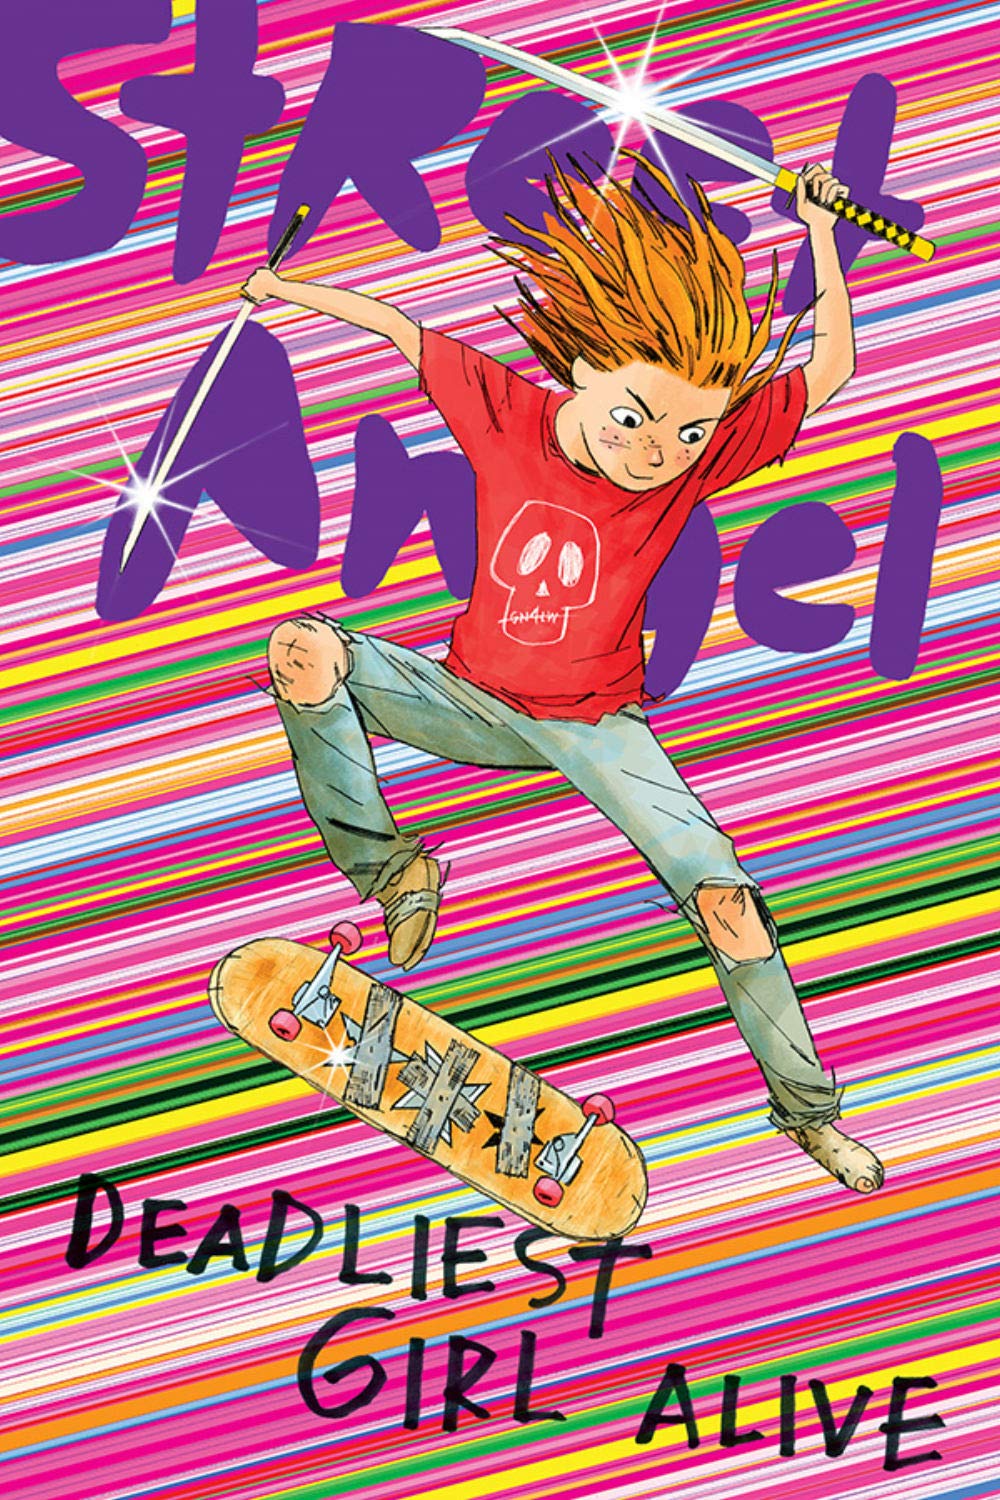 Graphic Novels for Fall 2019: Street Angel: Deadliest Girl Alive